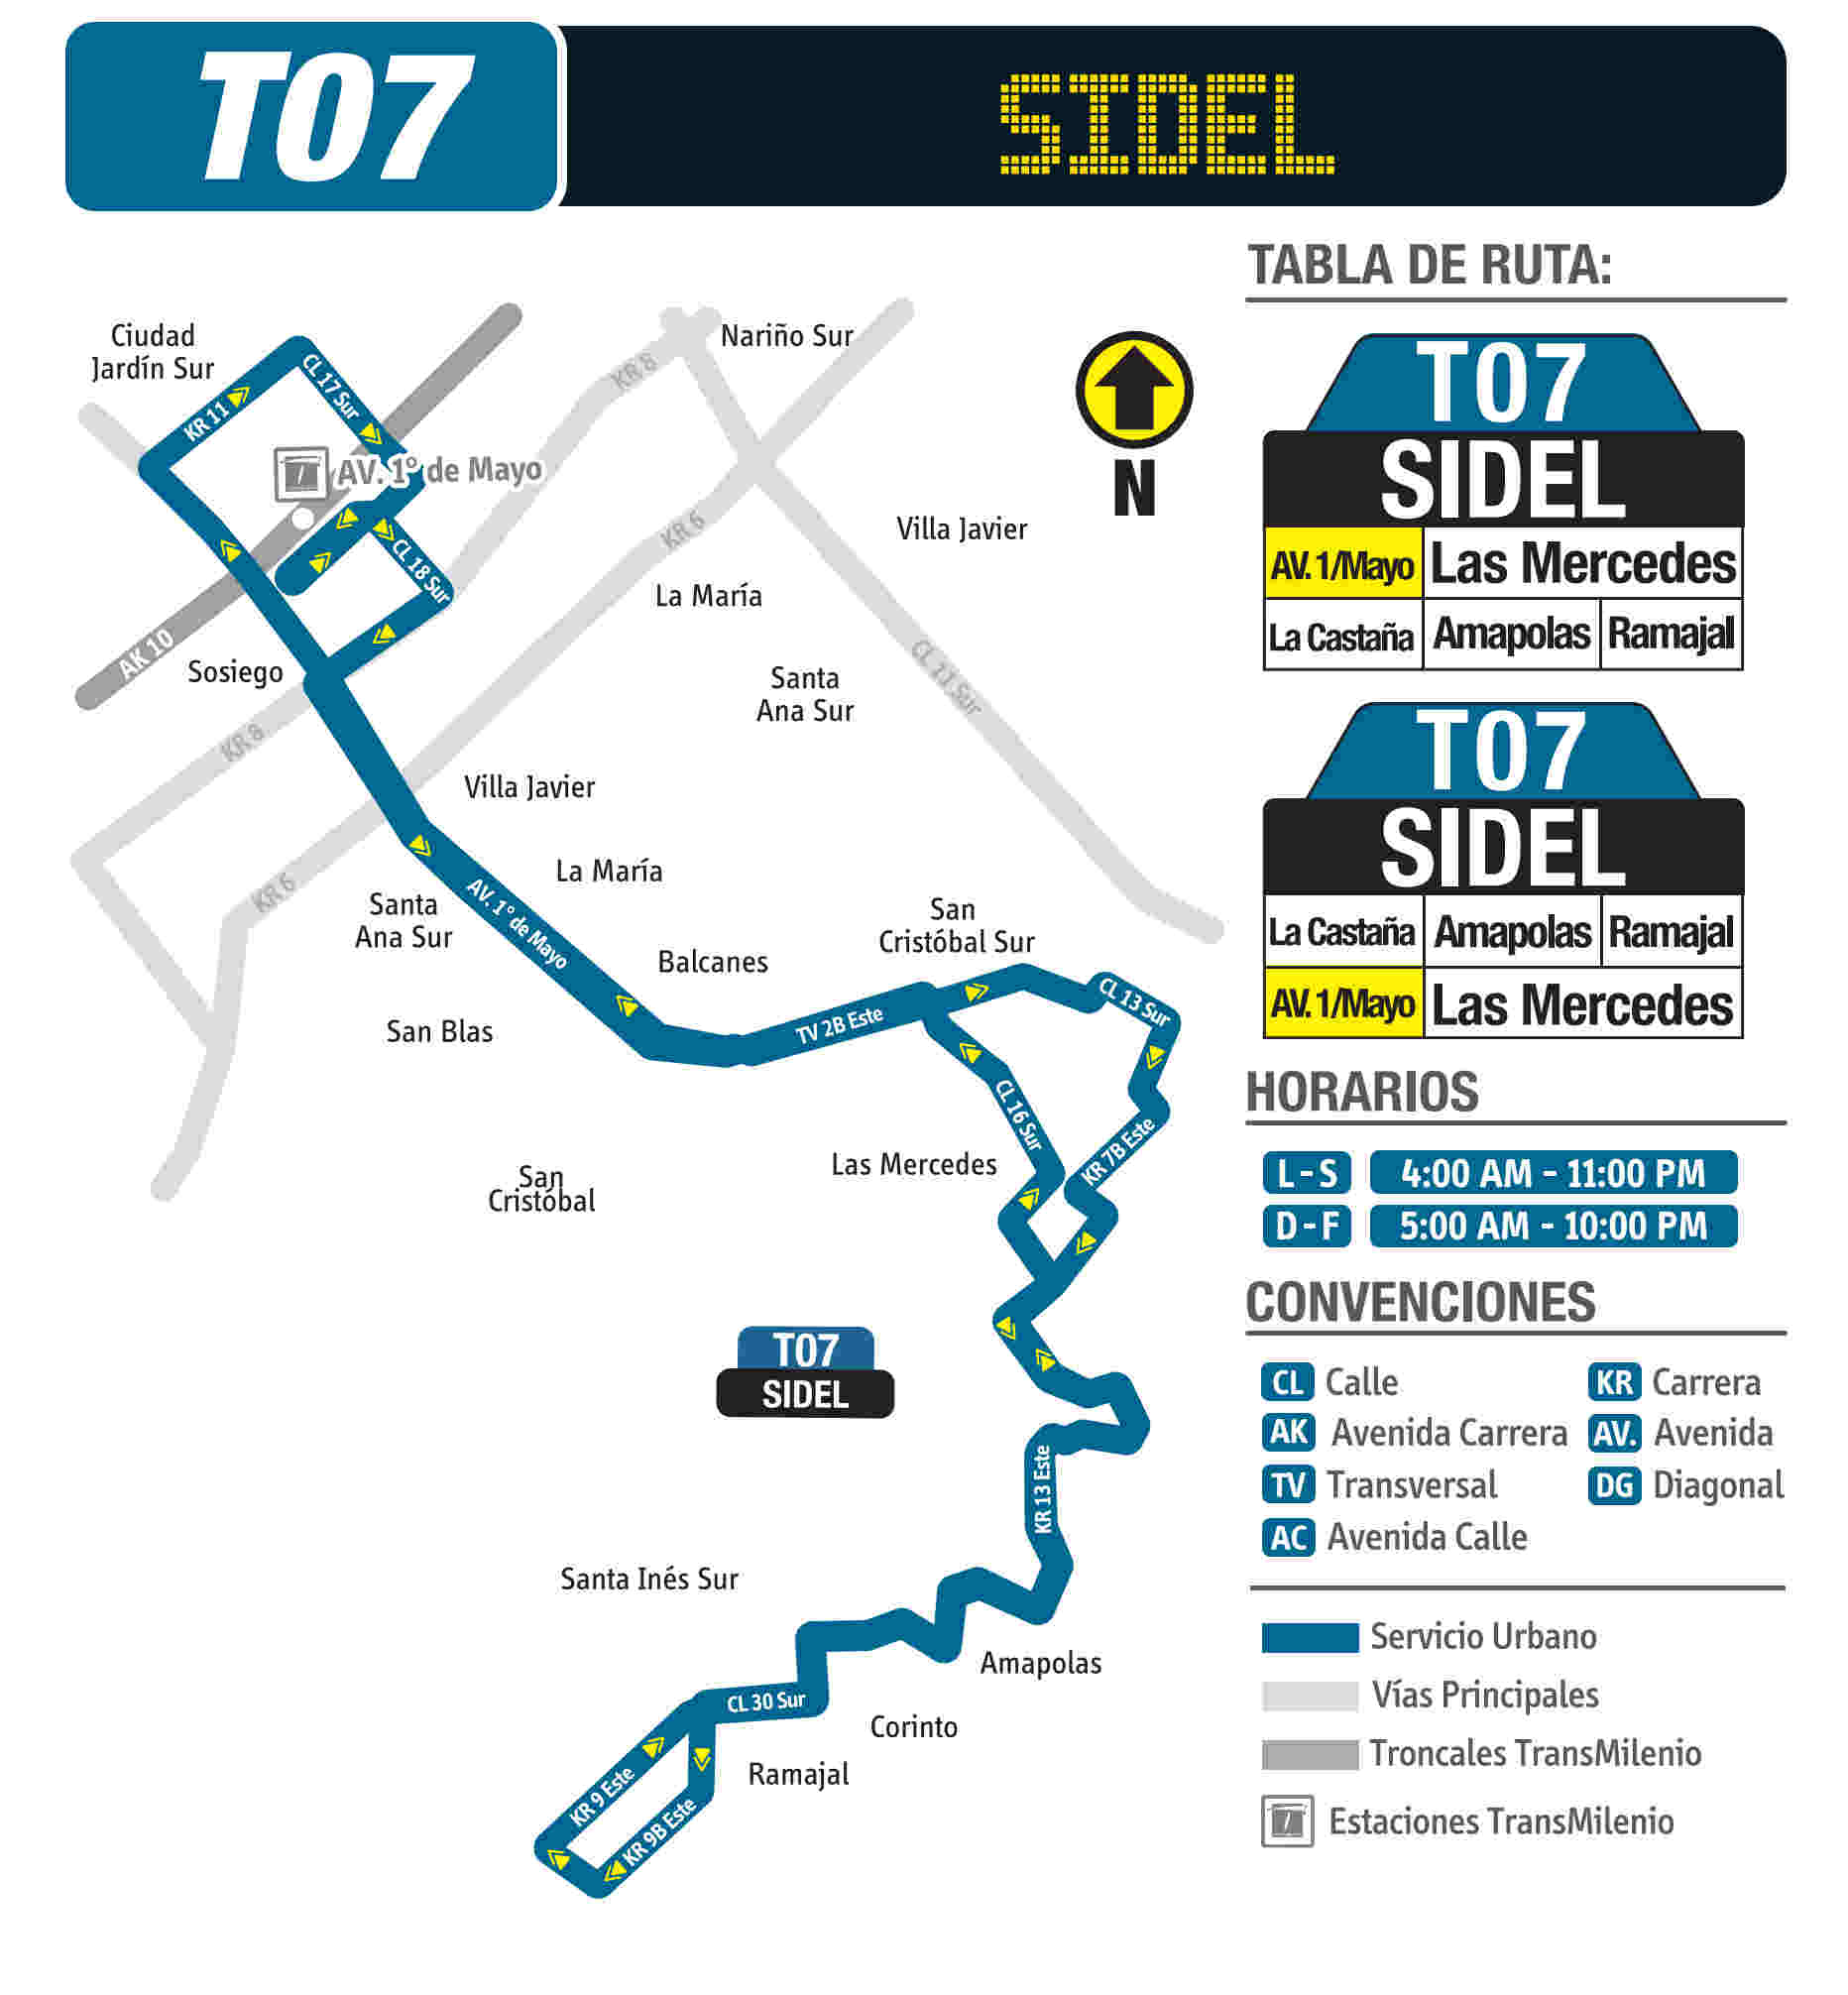 T07 Sidel, mapa bus urbano Bogotá